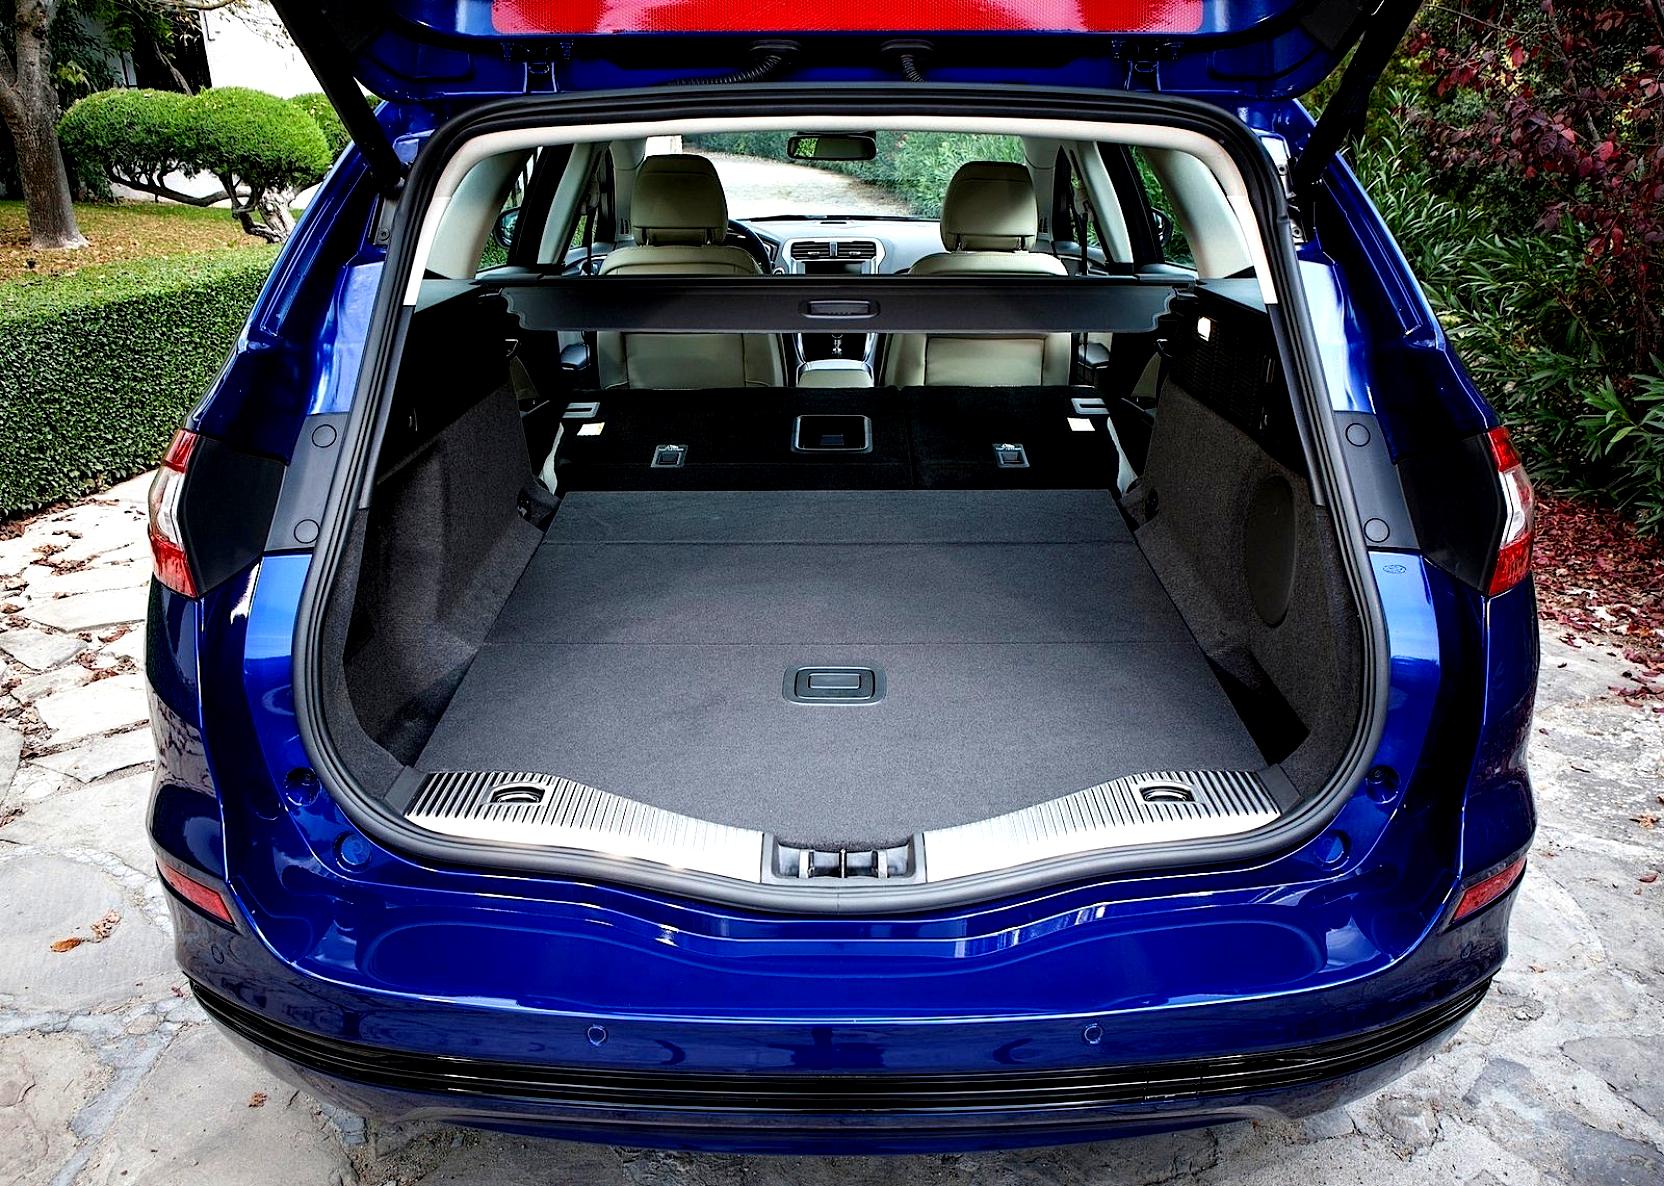 Ford Mondeo Wagon 2015 #89